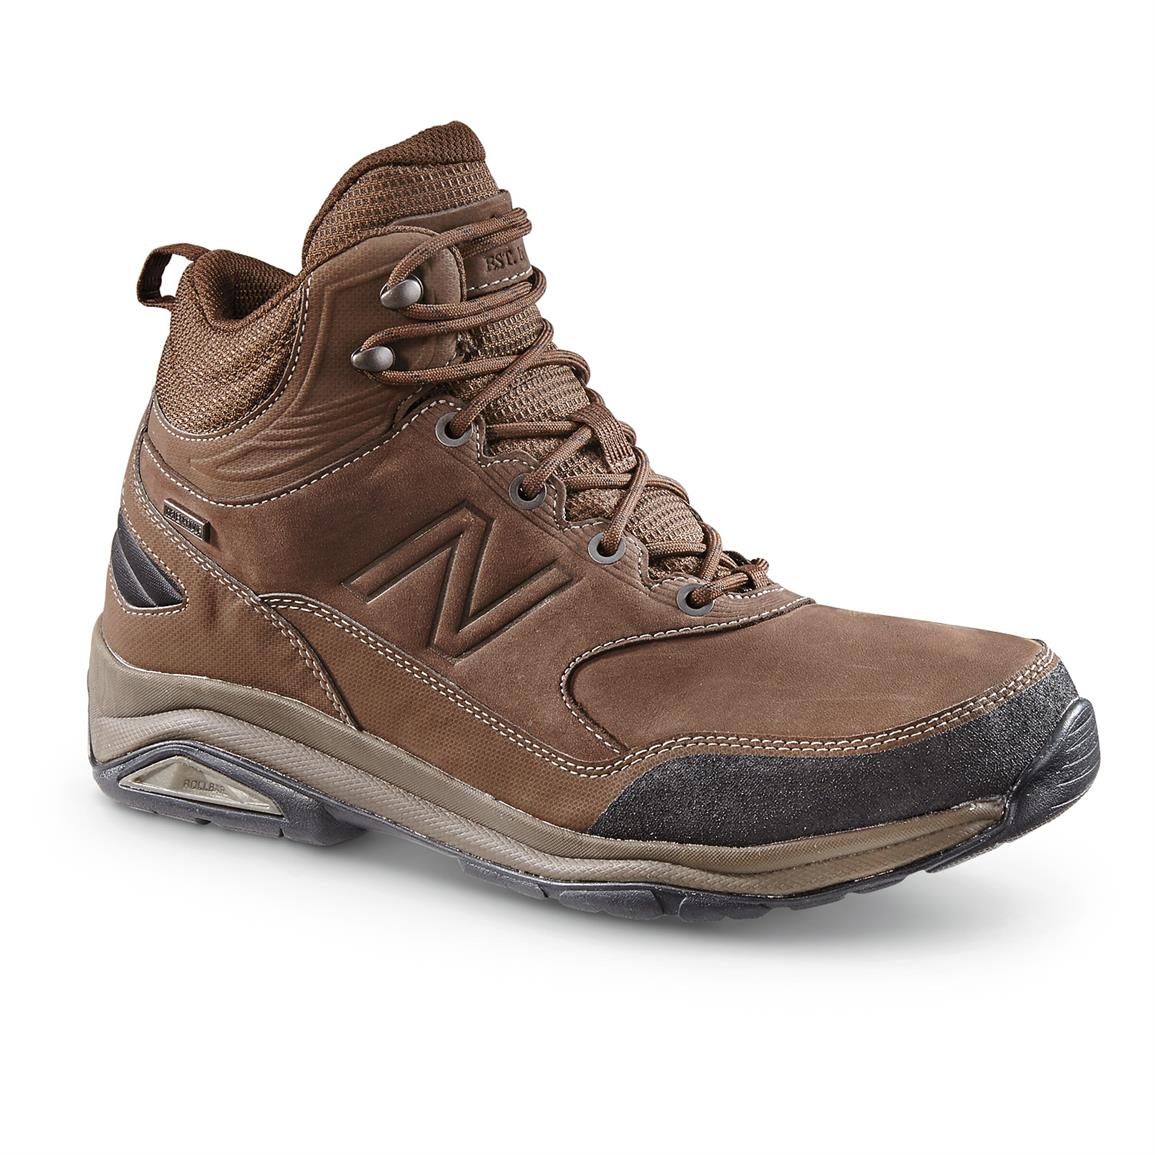 New Balance Men's 1400v1 Hiking Boots, Waterproof - 649026, Hiking